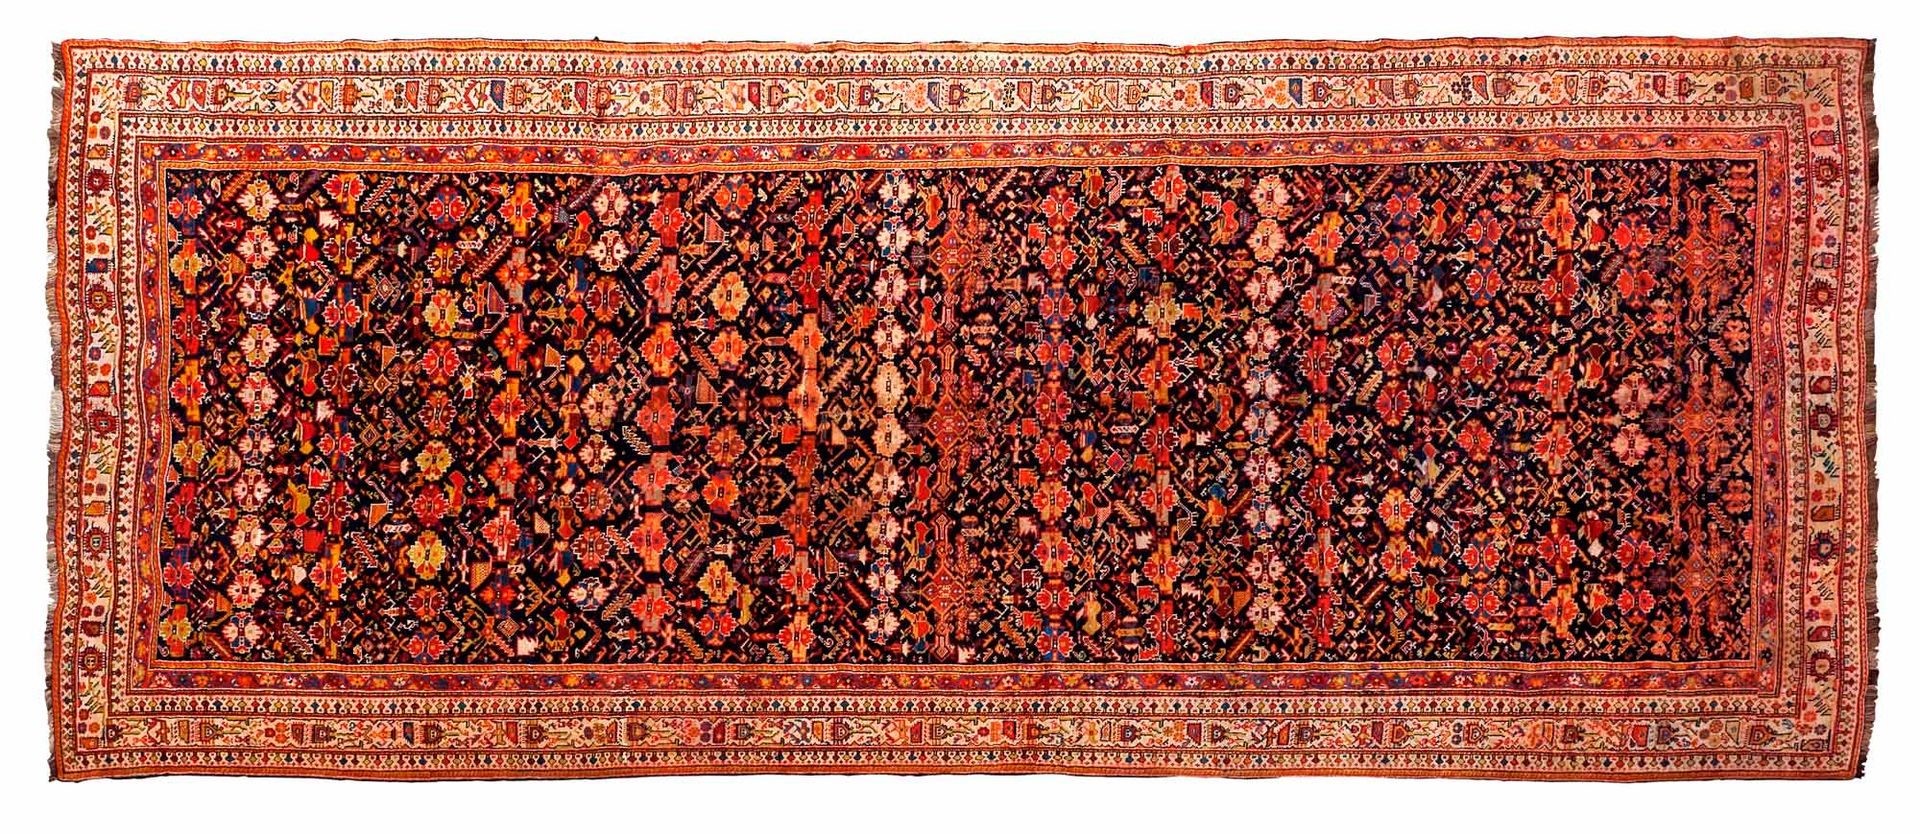 Null ARTSAKH / KARABAKH carpet (Caucasus, Armenia), late 19th century

Dimension&hellip;